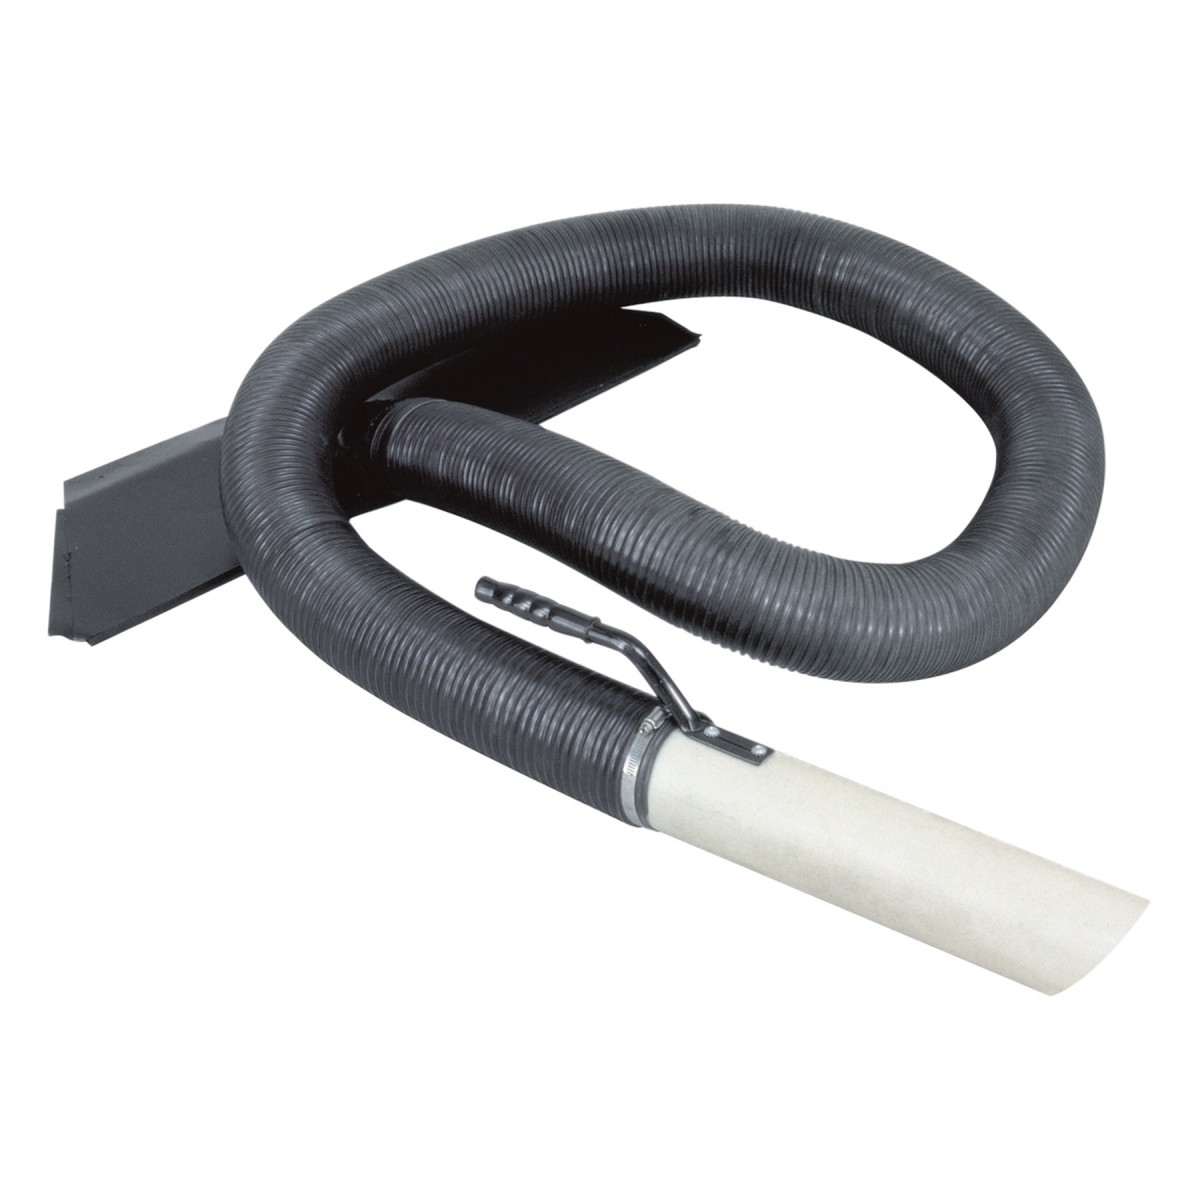 Suction hose, vacuum cleaner tube with AL-KO 750 B nozzle